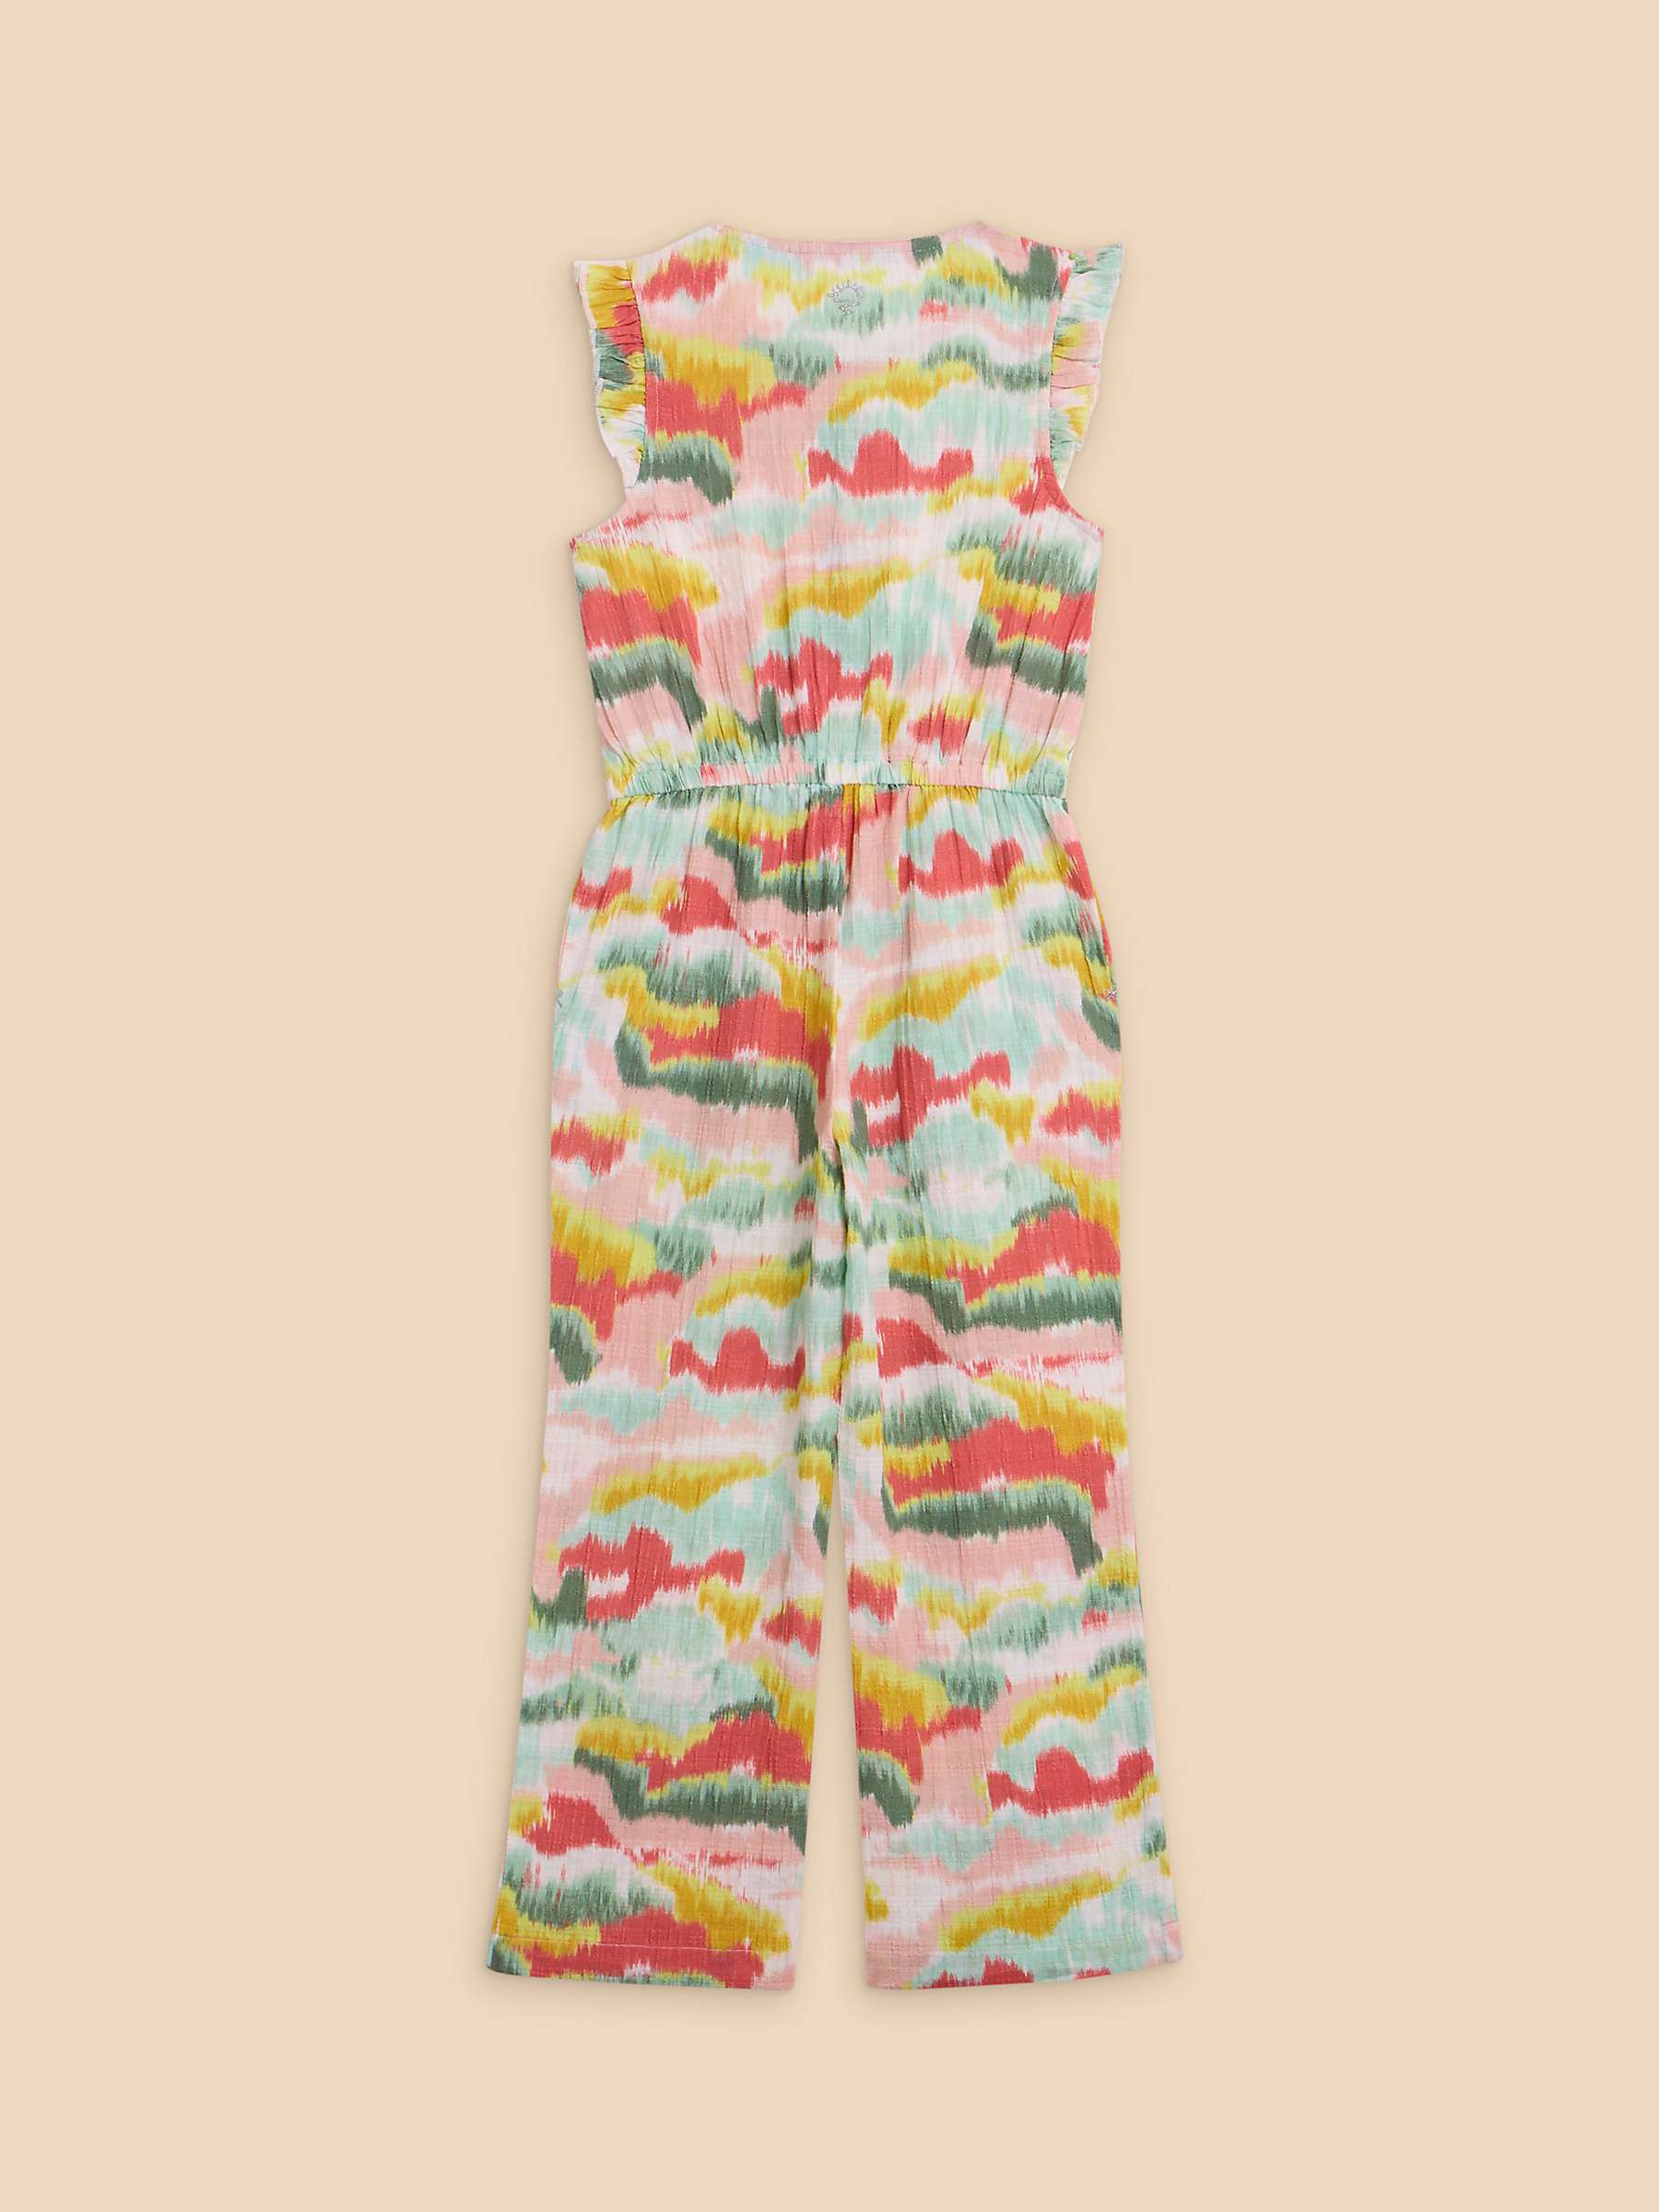 Buy White Stuff Kids' Tie Dye Print Jumpsuit, Pink/Multi Online at johnlewis.com